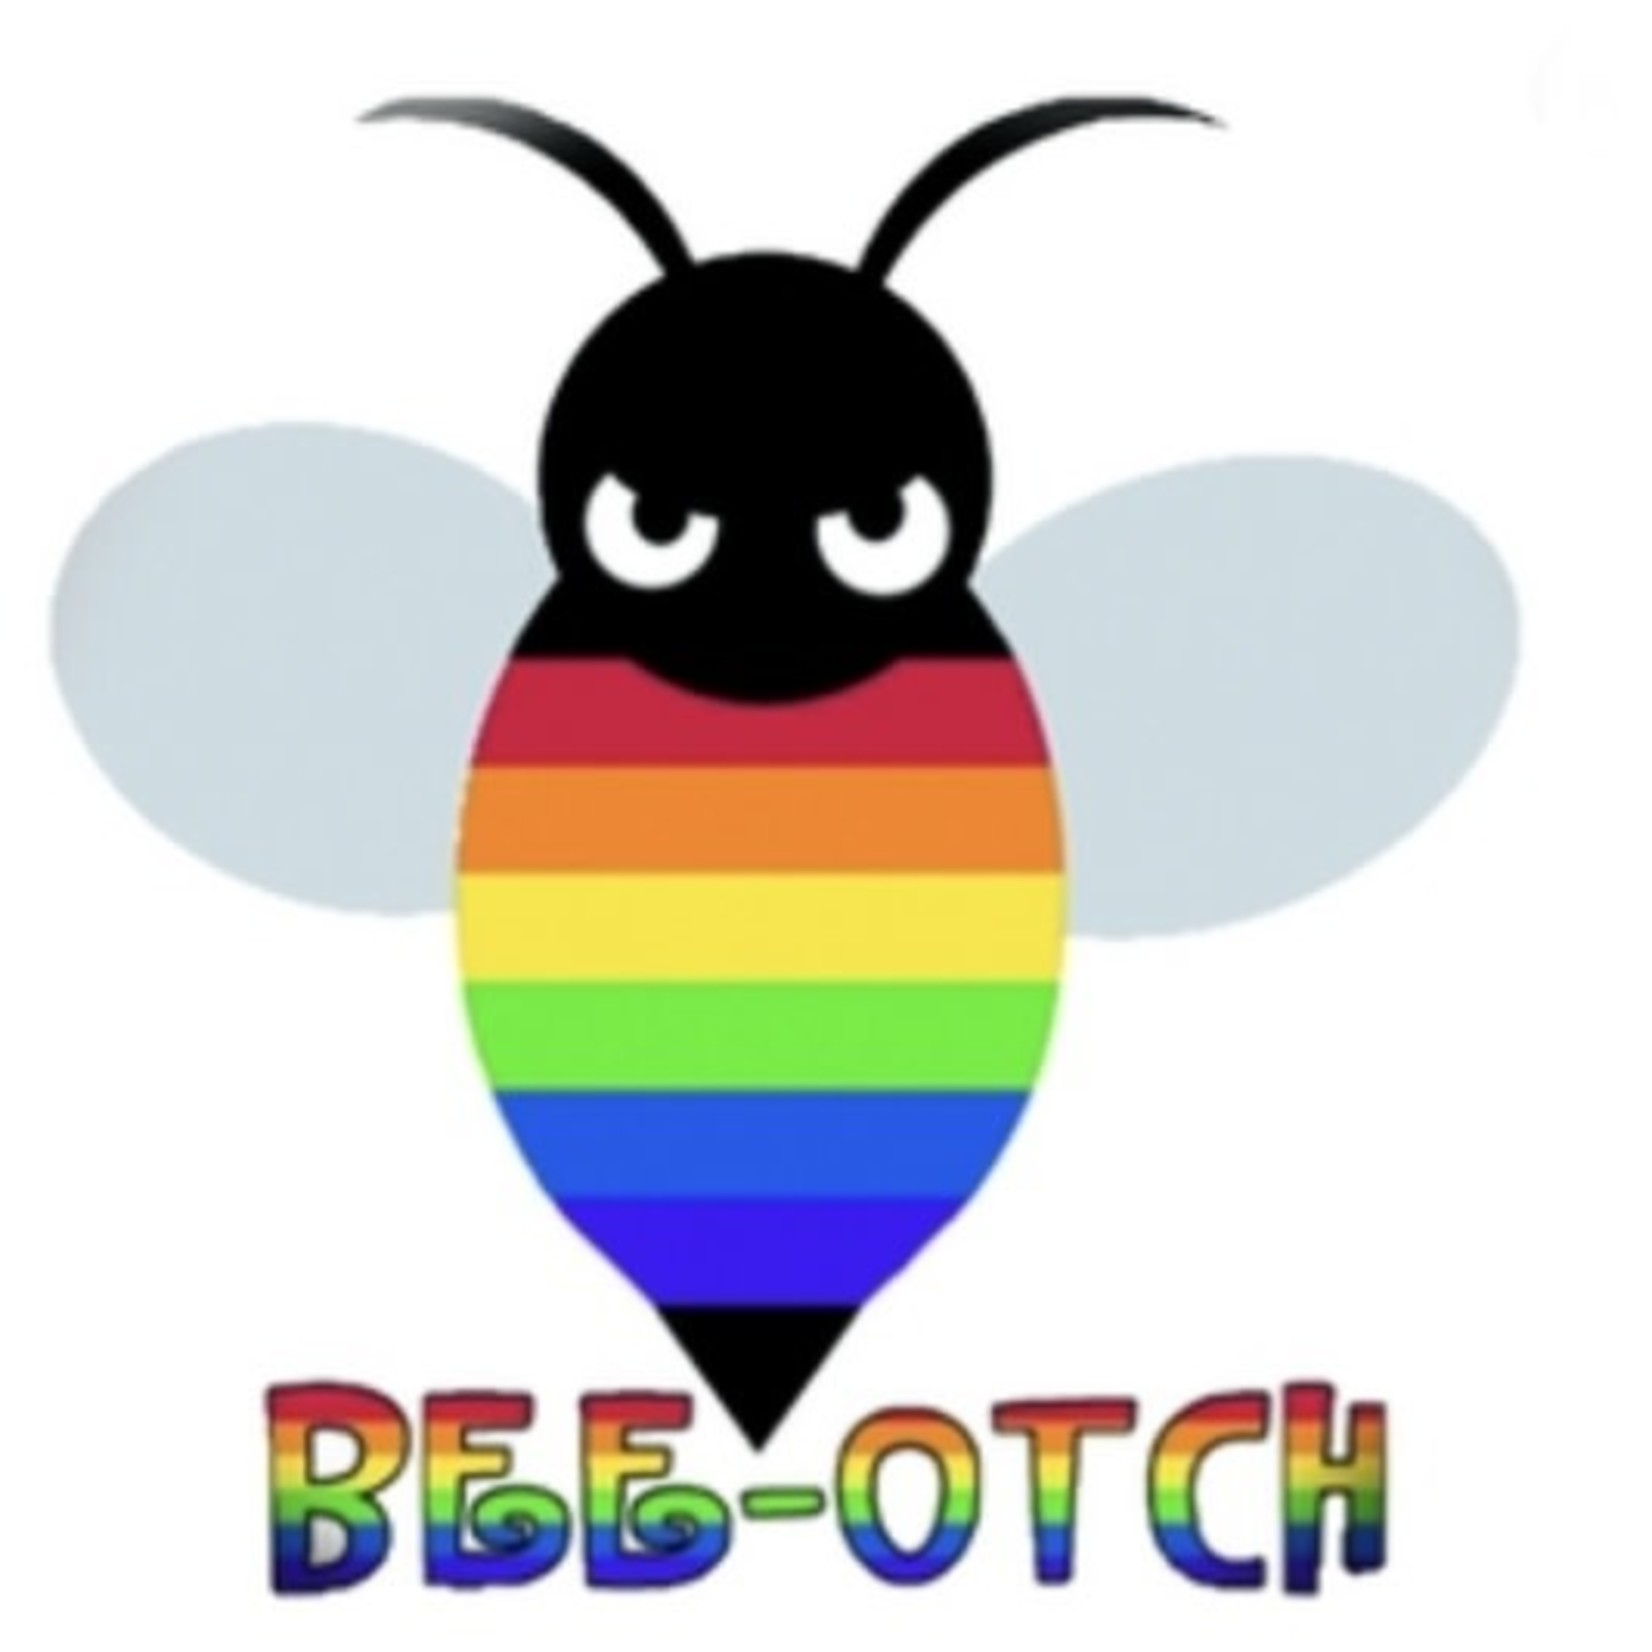 Pride not Prejudice Sticker Rainbow Bee-Otch